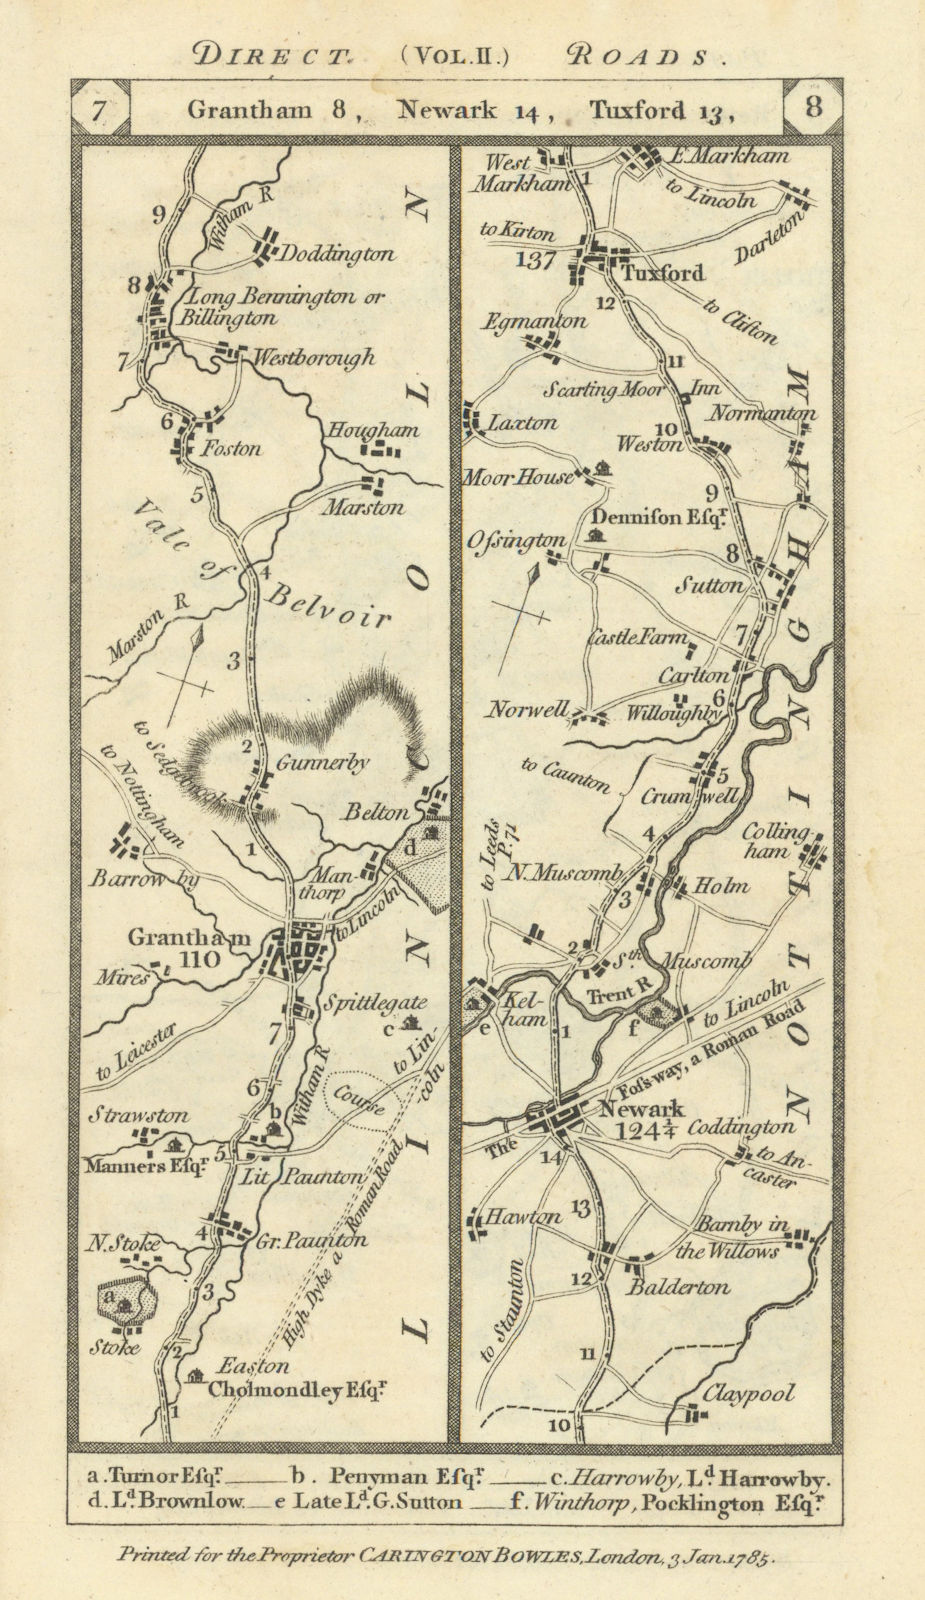 Associate Product Grantham - Doddington - Newark - Tuxford road strip map PATERSON 1785 old